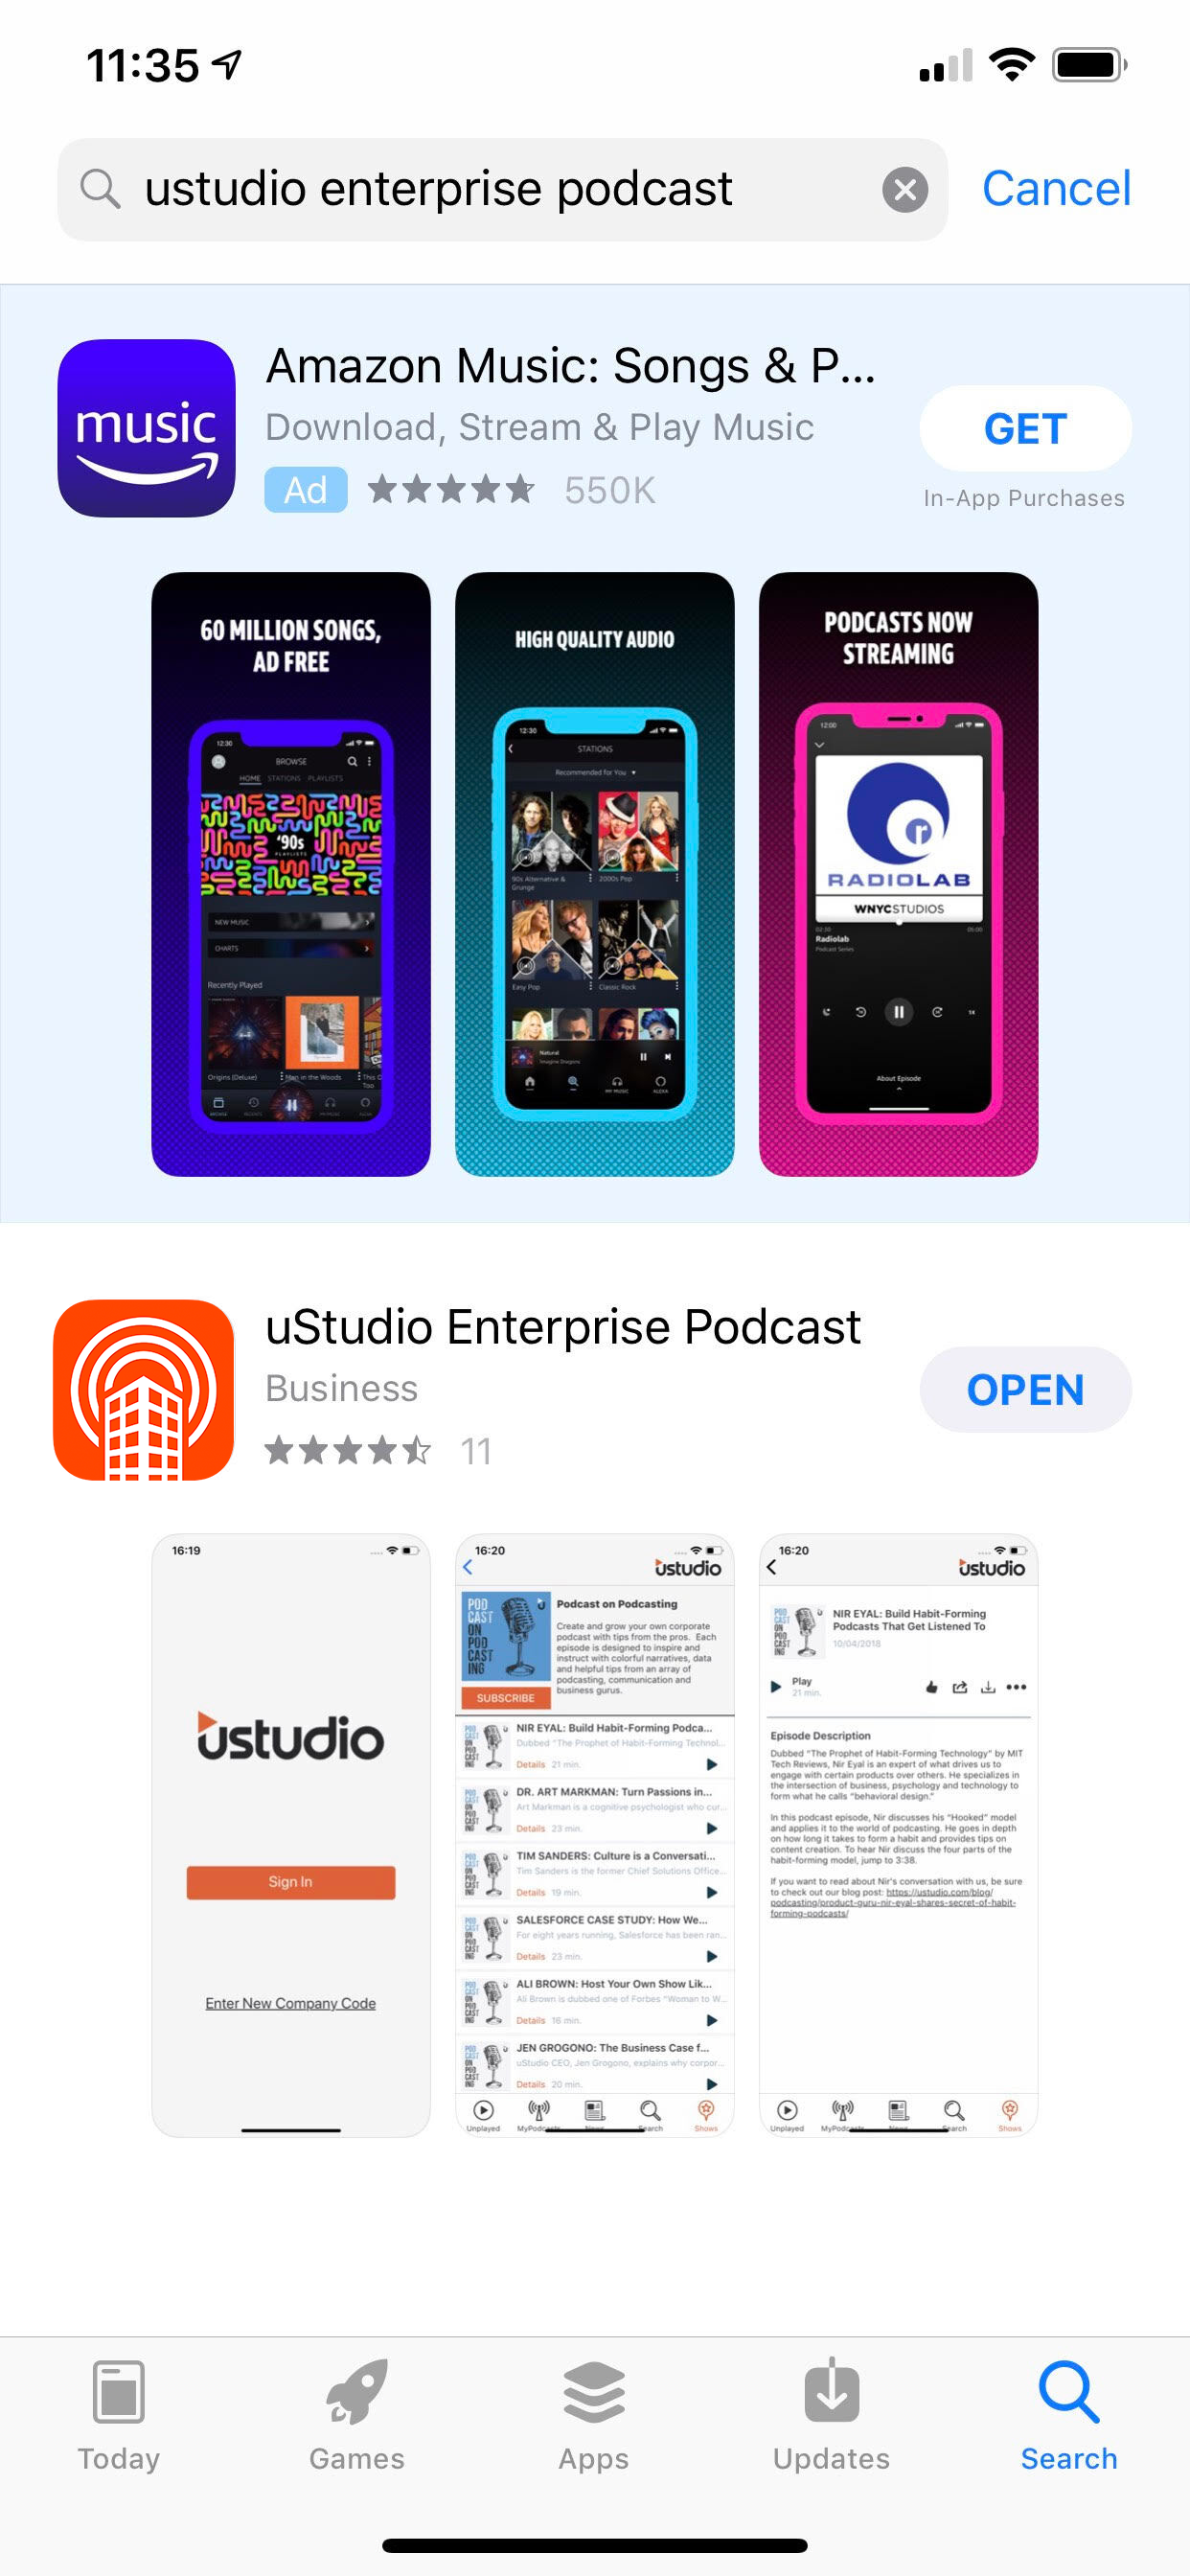 ustudio_enterprise_podcast_apple_store_search.png